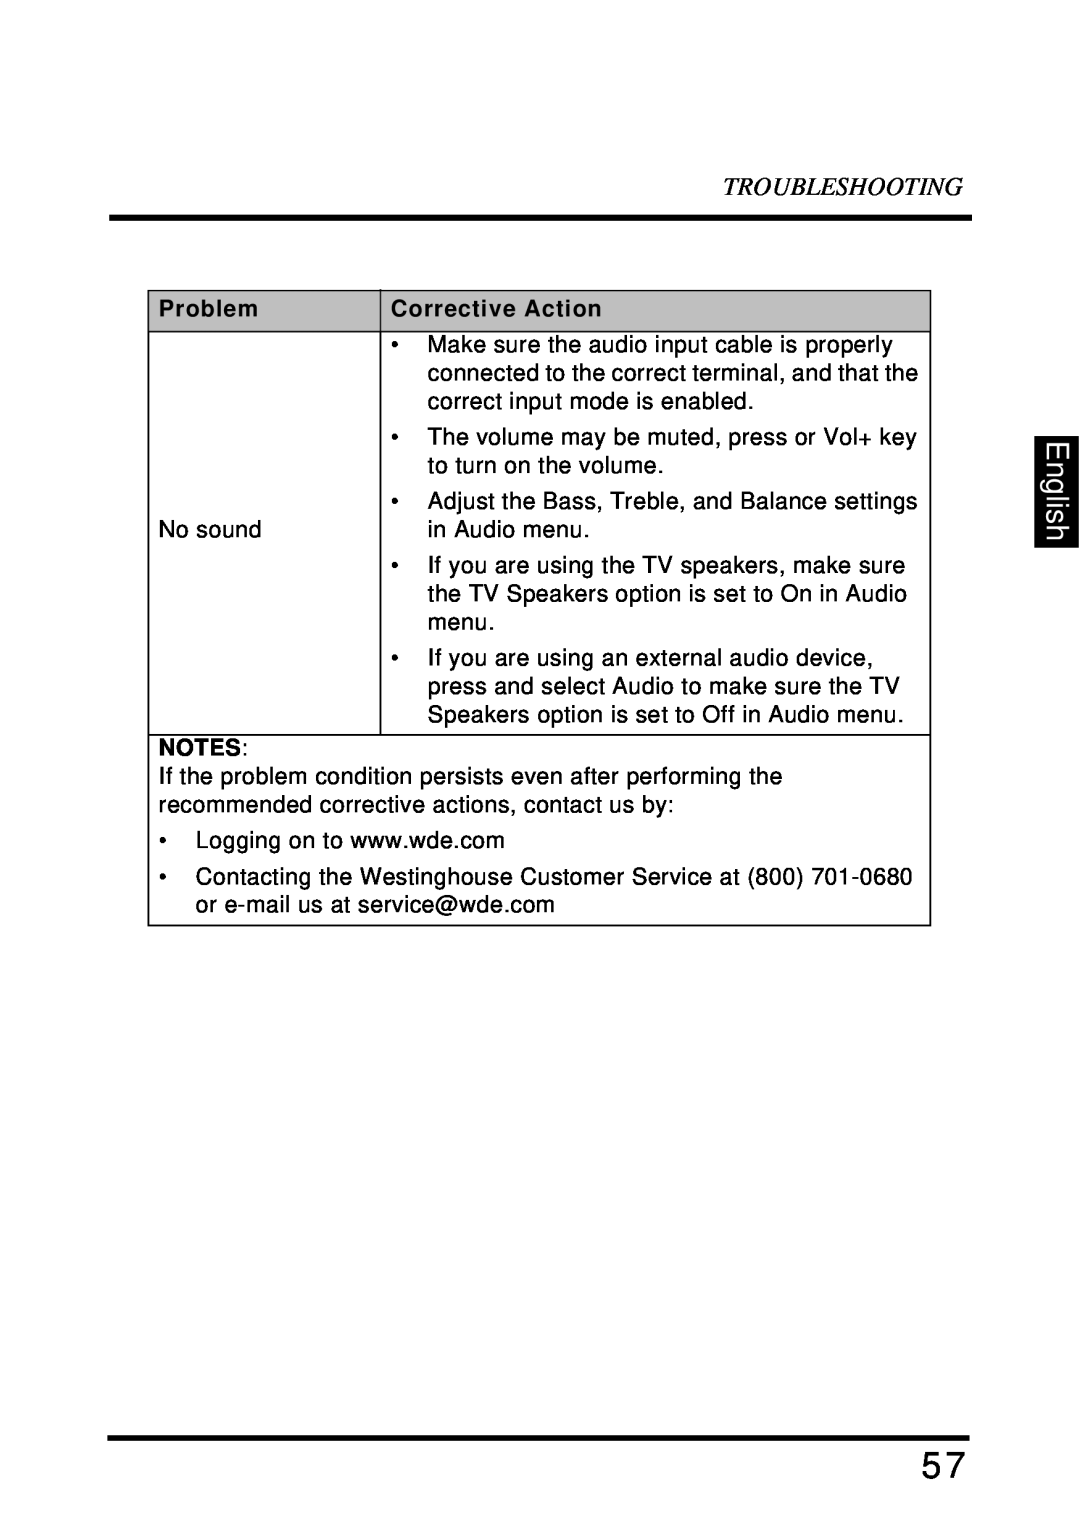 Westinghouse LD-4680 user manual English, Troubleshooting 